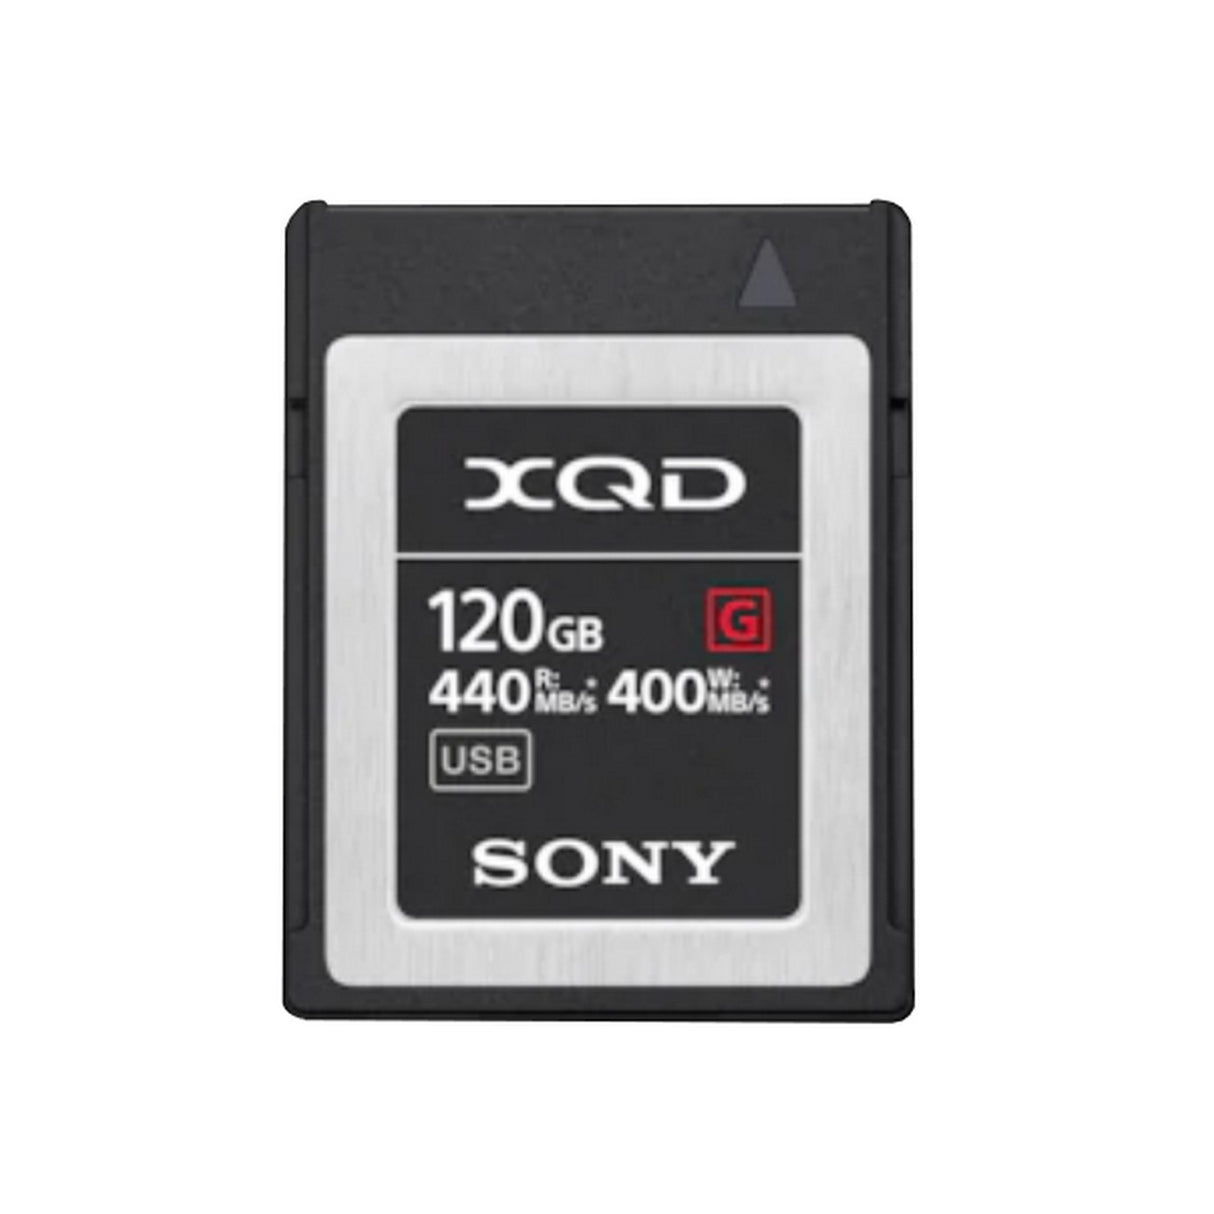 Sony QD-G120F | XQD G Series 120GB Memory Card